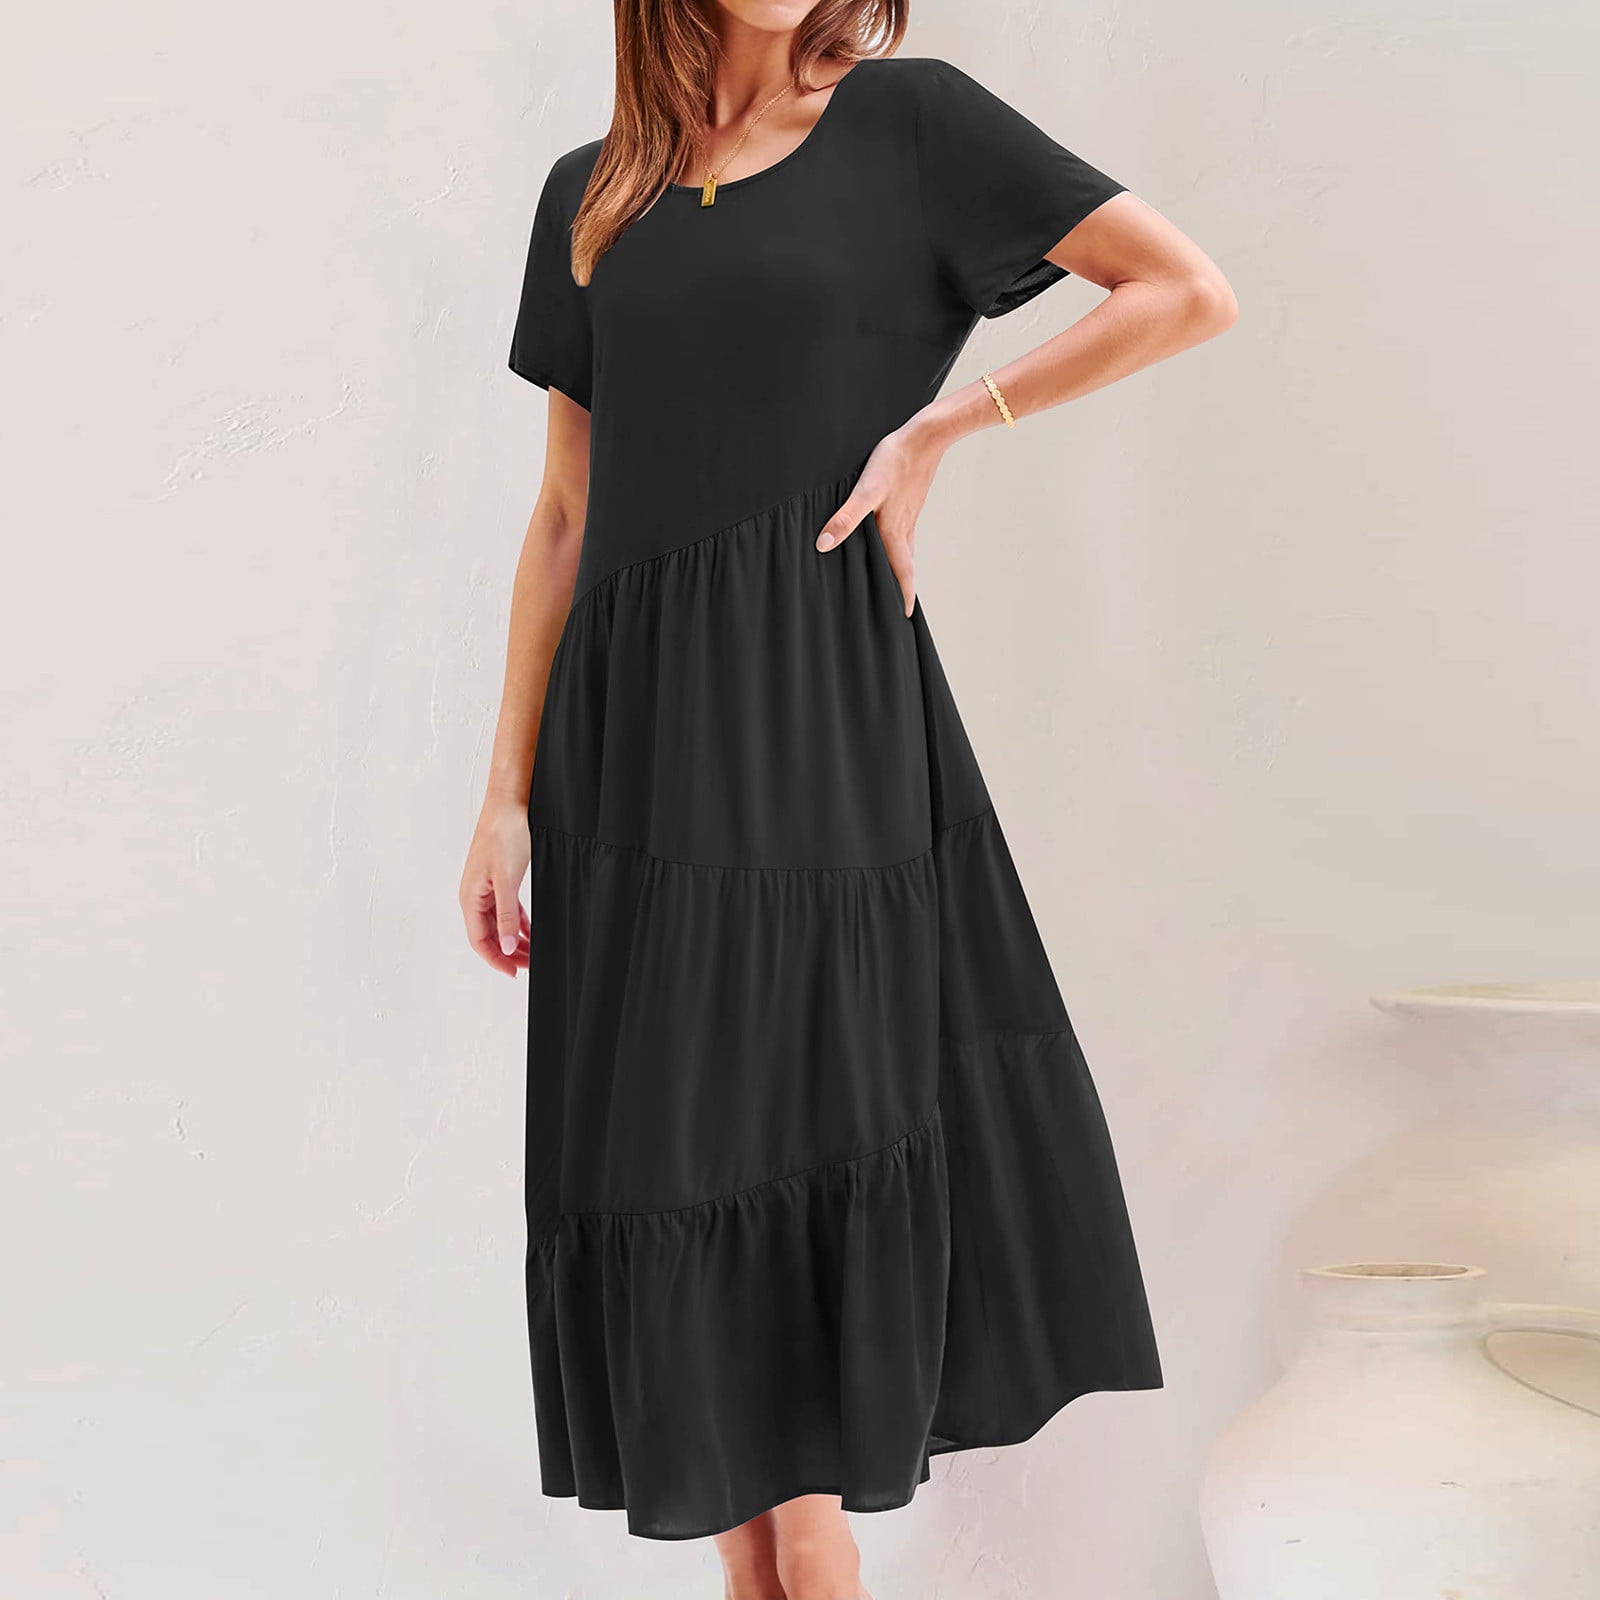 VKEKIEO Black Dress For Funeral Flowy Summer Dress For Women A